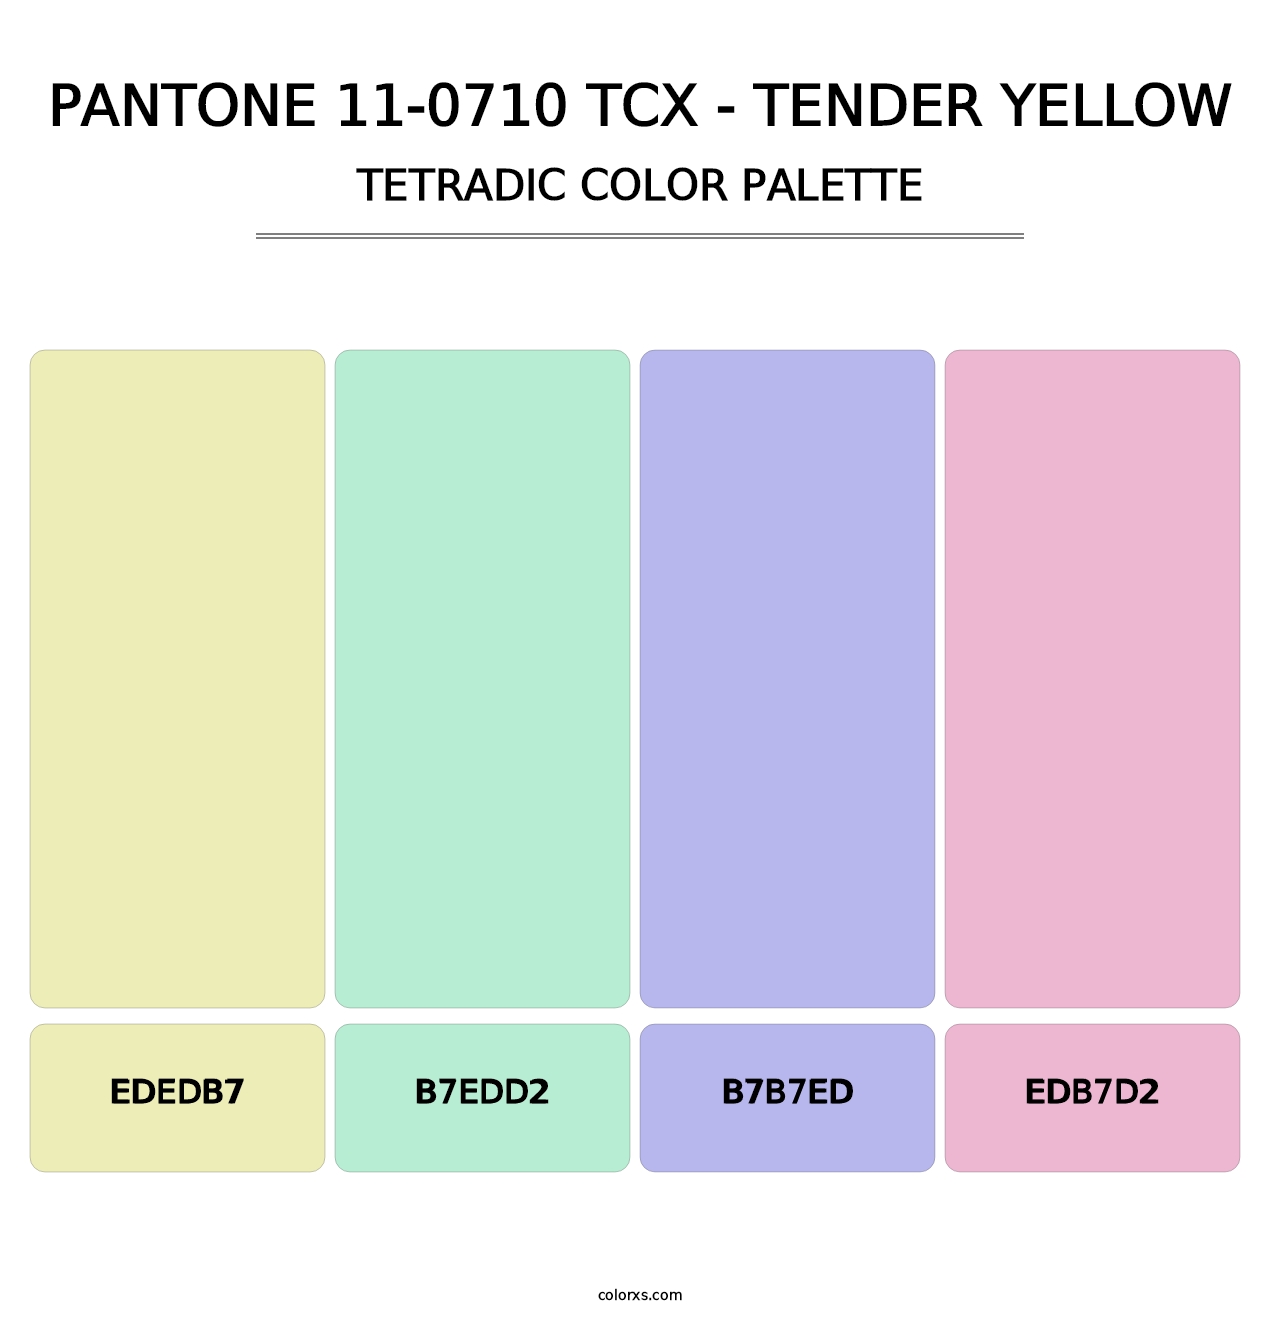 PANTONE 11-0710 TCX - Tender Yellow - Tetradic Color Palette